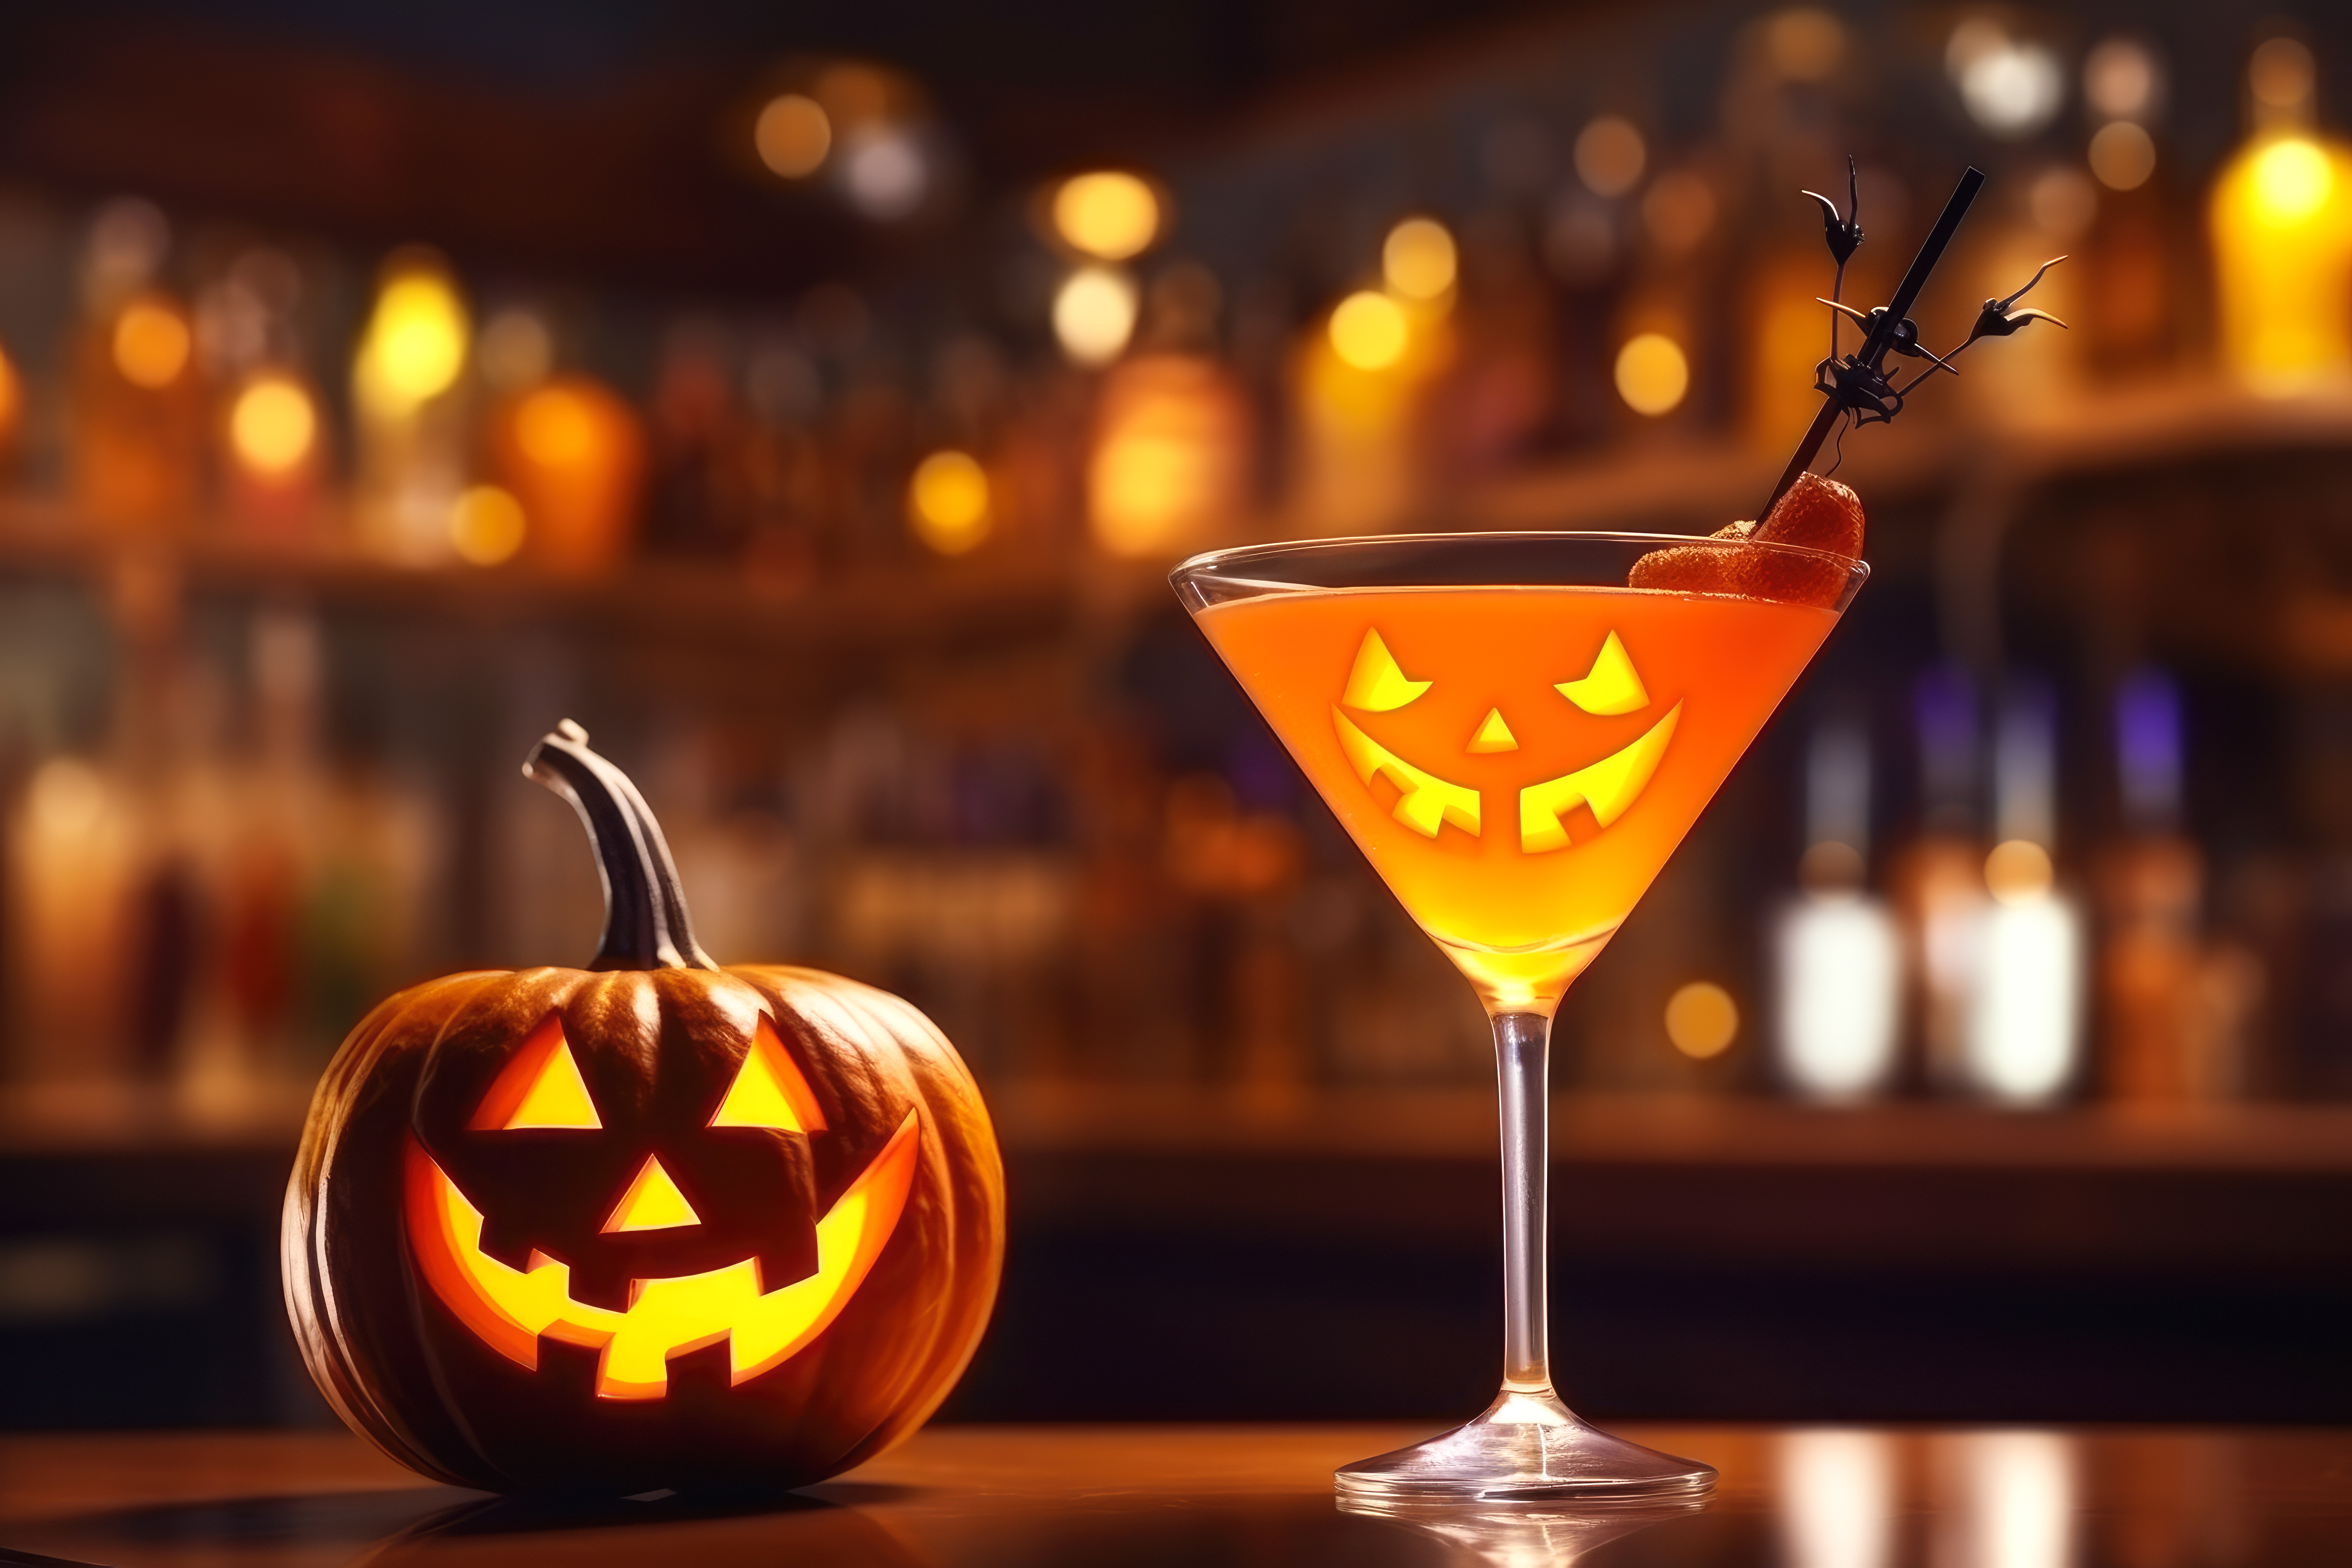 Halloween Drinks